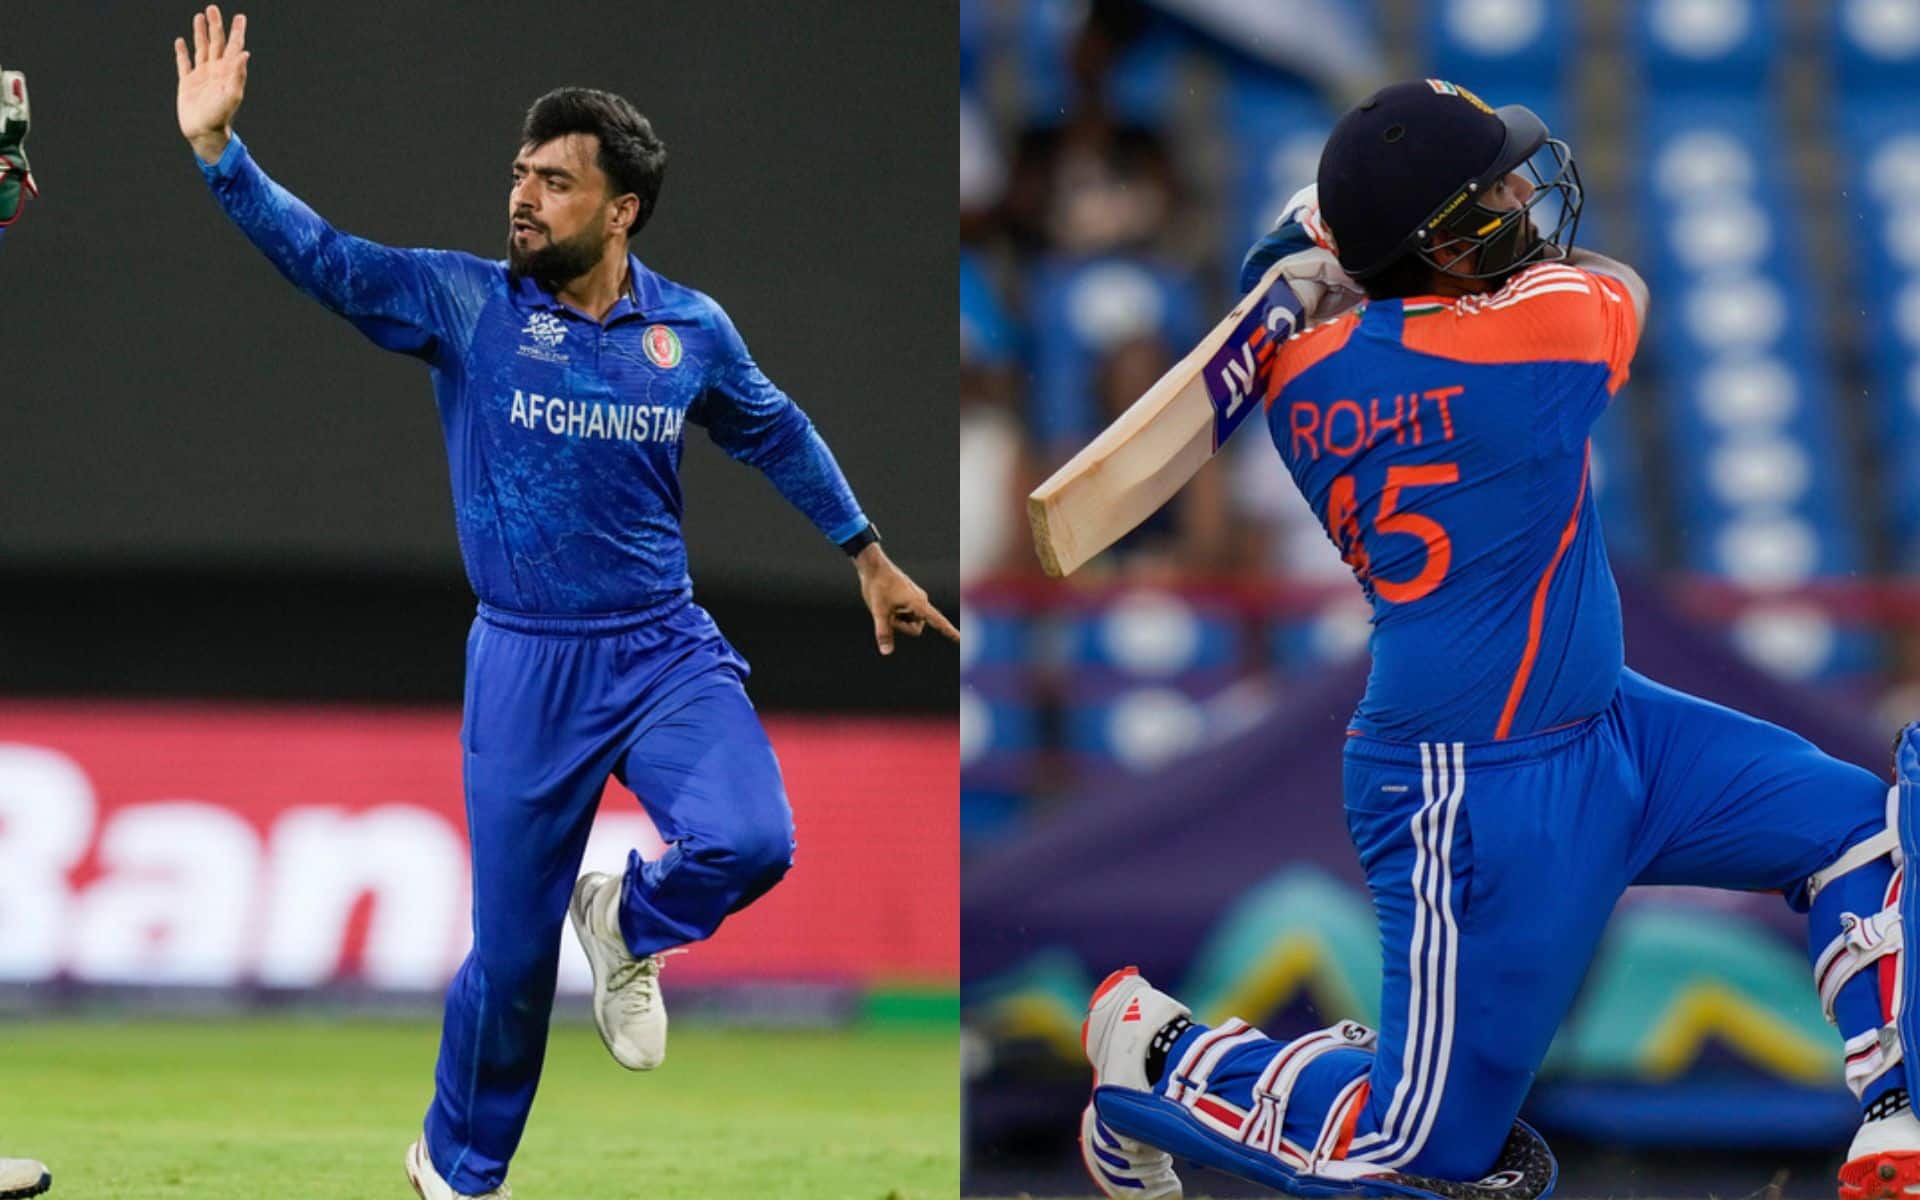 Rashid Khan and Rohit Sharma has led their teams very well in the tournament [AP Photos]